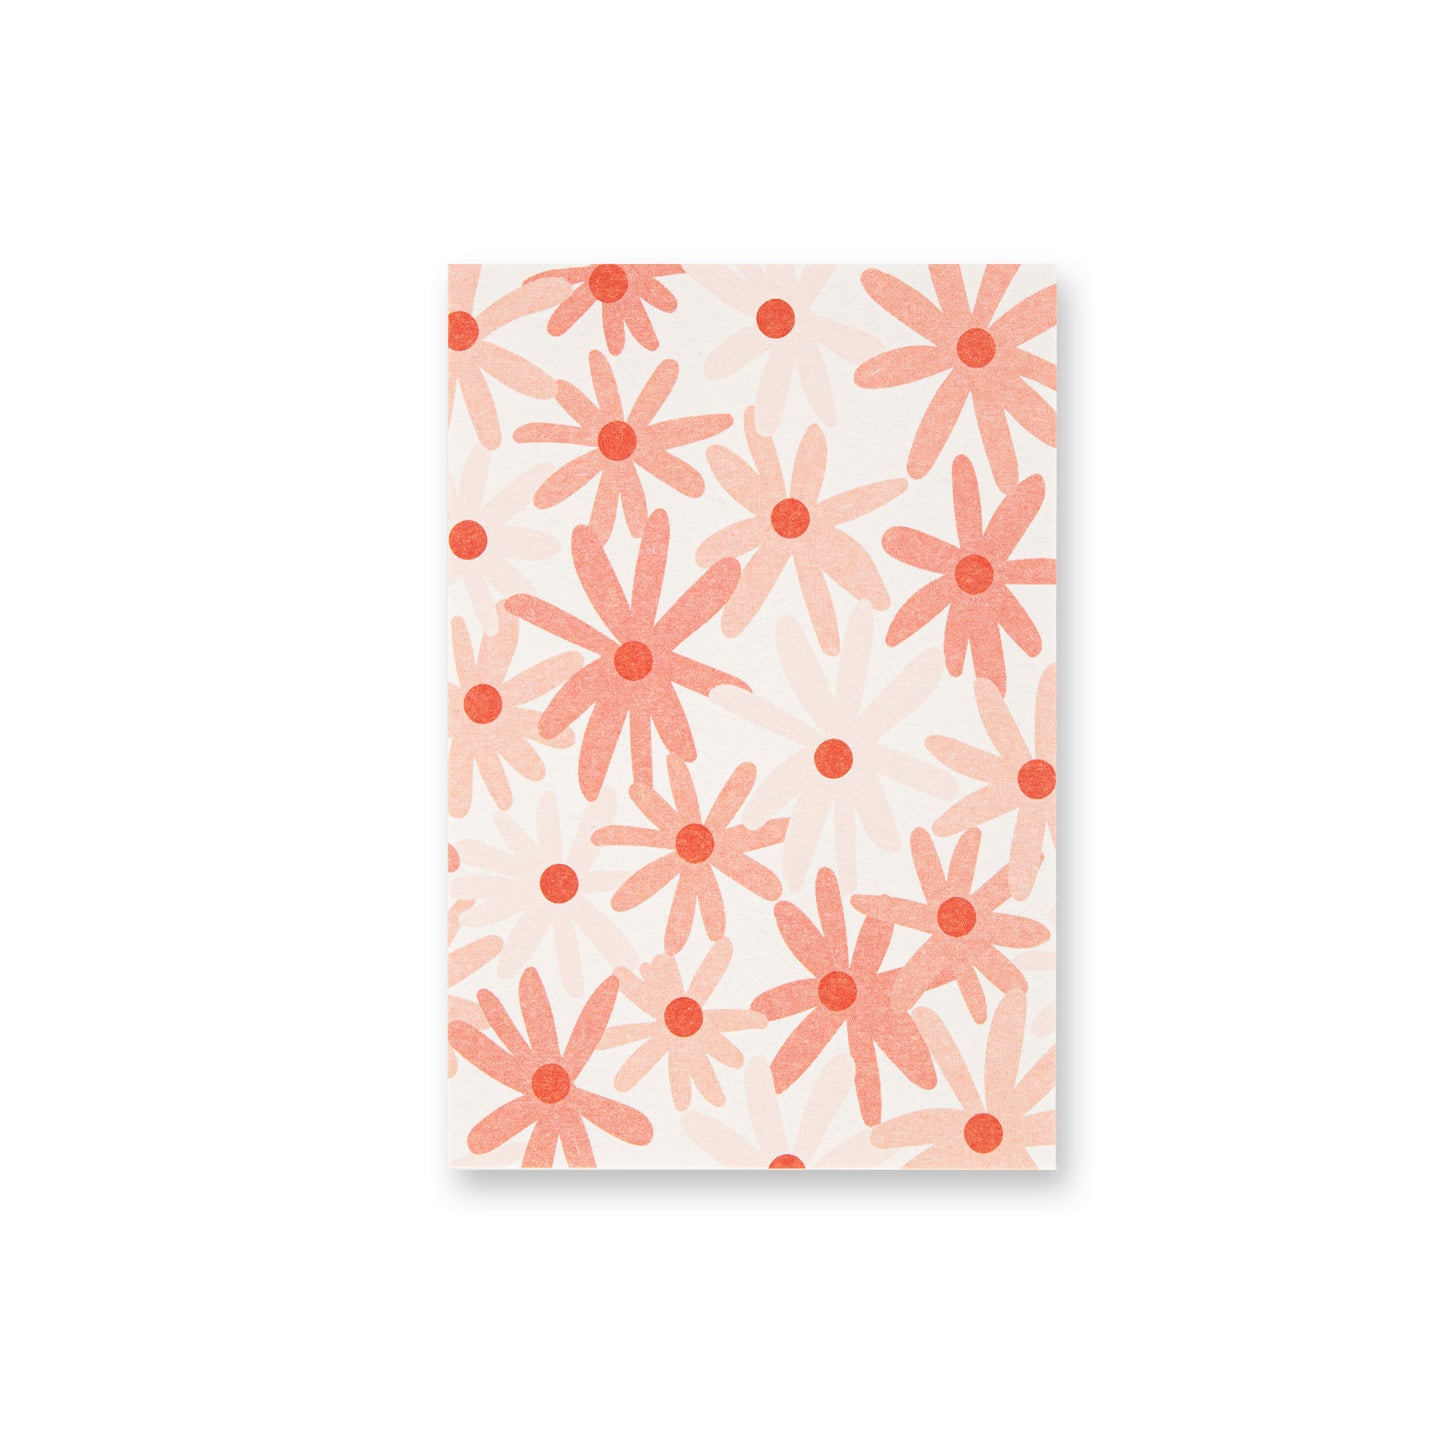 Sweetness Strawberry Coconut Scrapbook Paper - 50 sheets